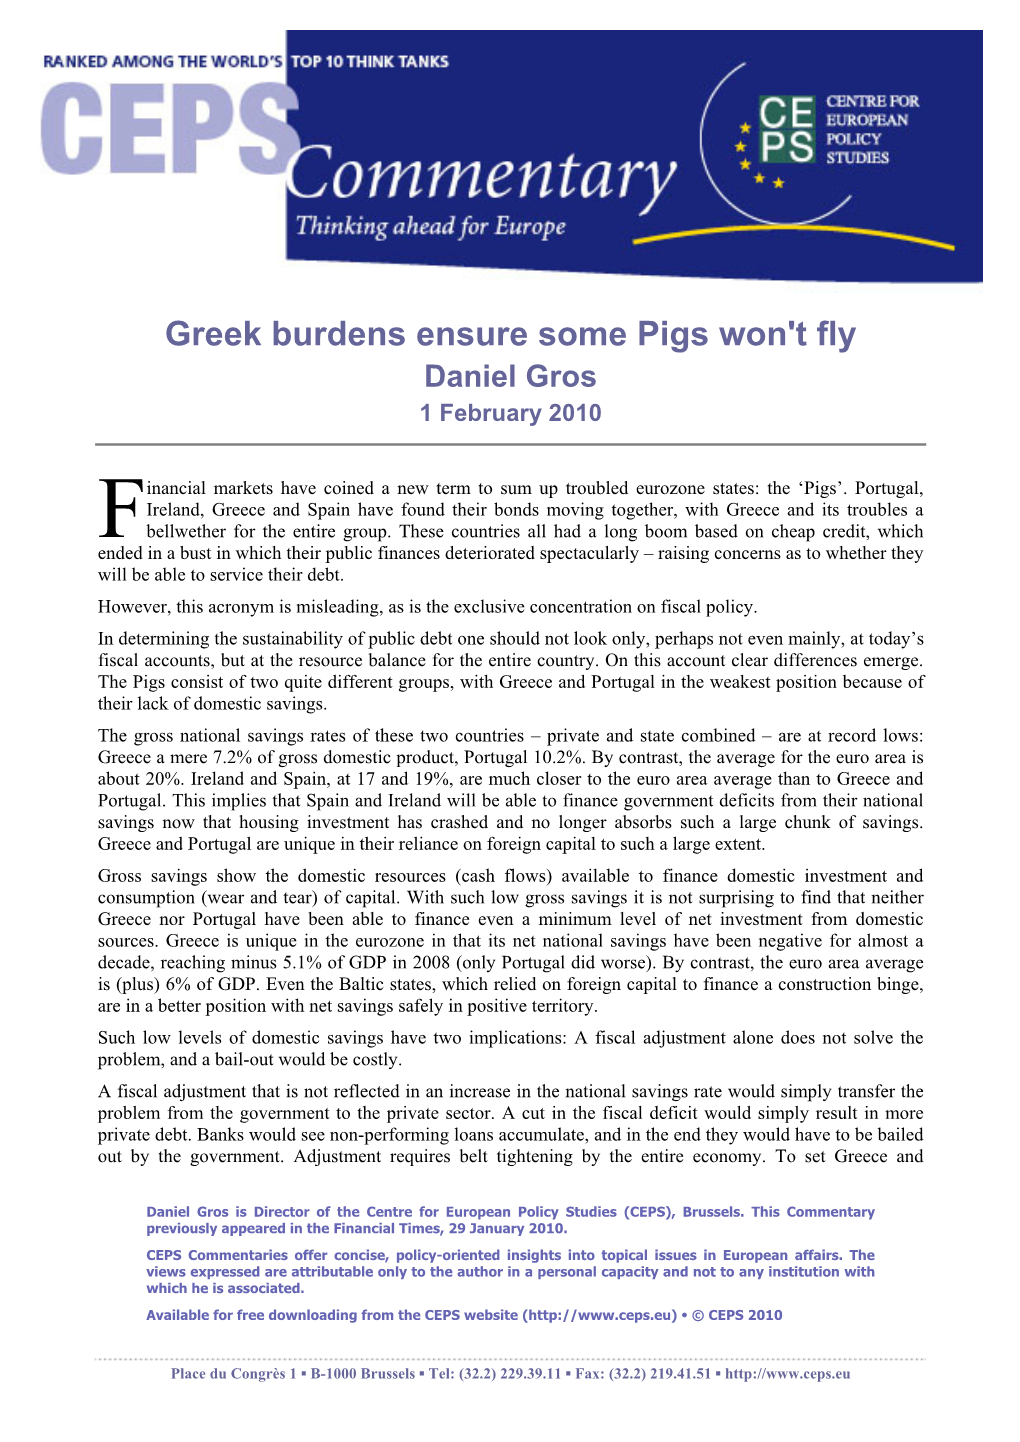 Greek Burdens Ensure Some Pigs Won't Fly Daniel Gros 1 February 2010